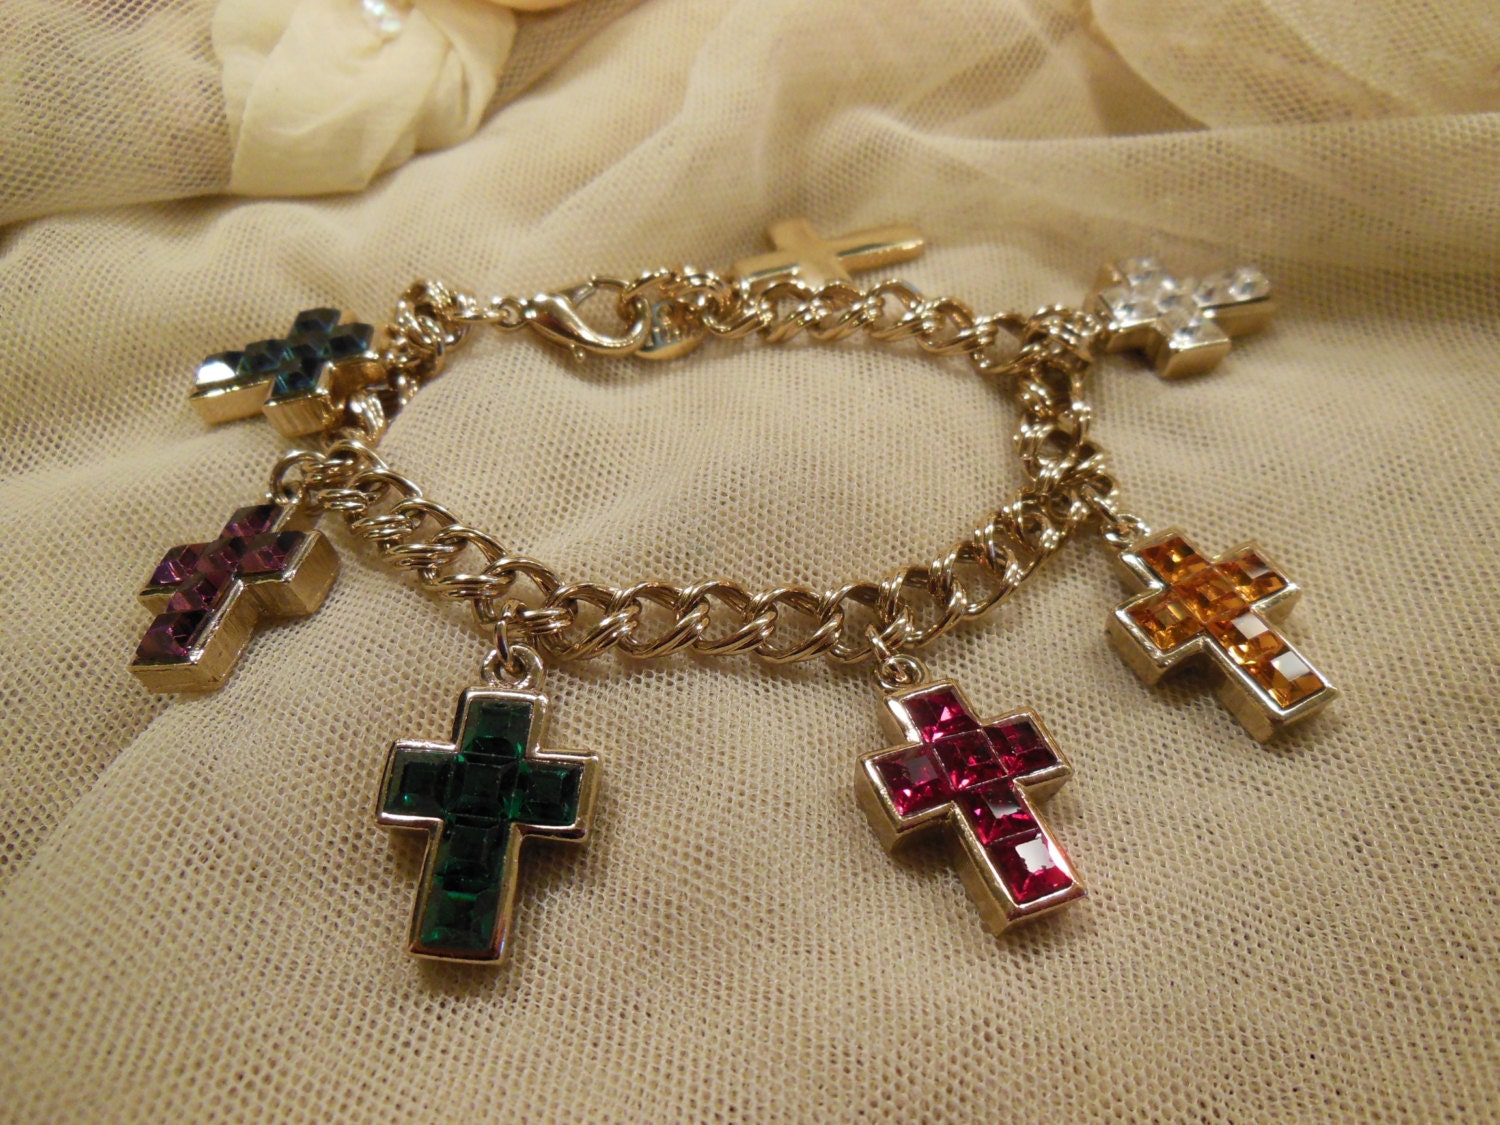 Vintage Wallis Simpson Inspired Cross Charm Bracelet by